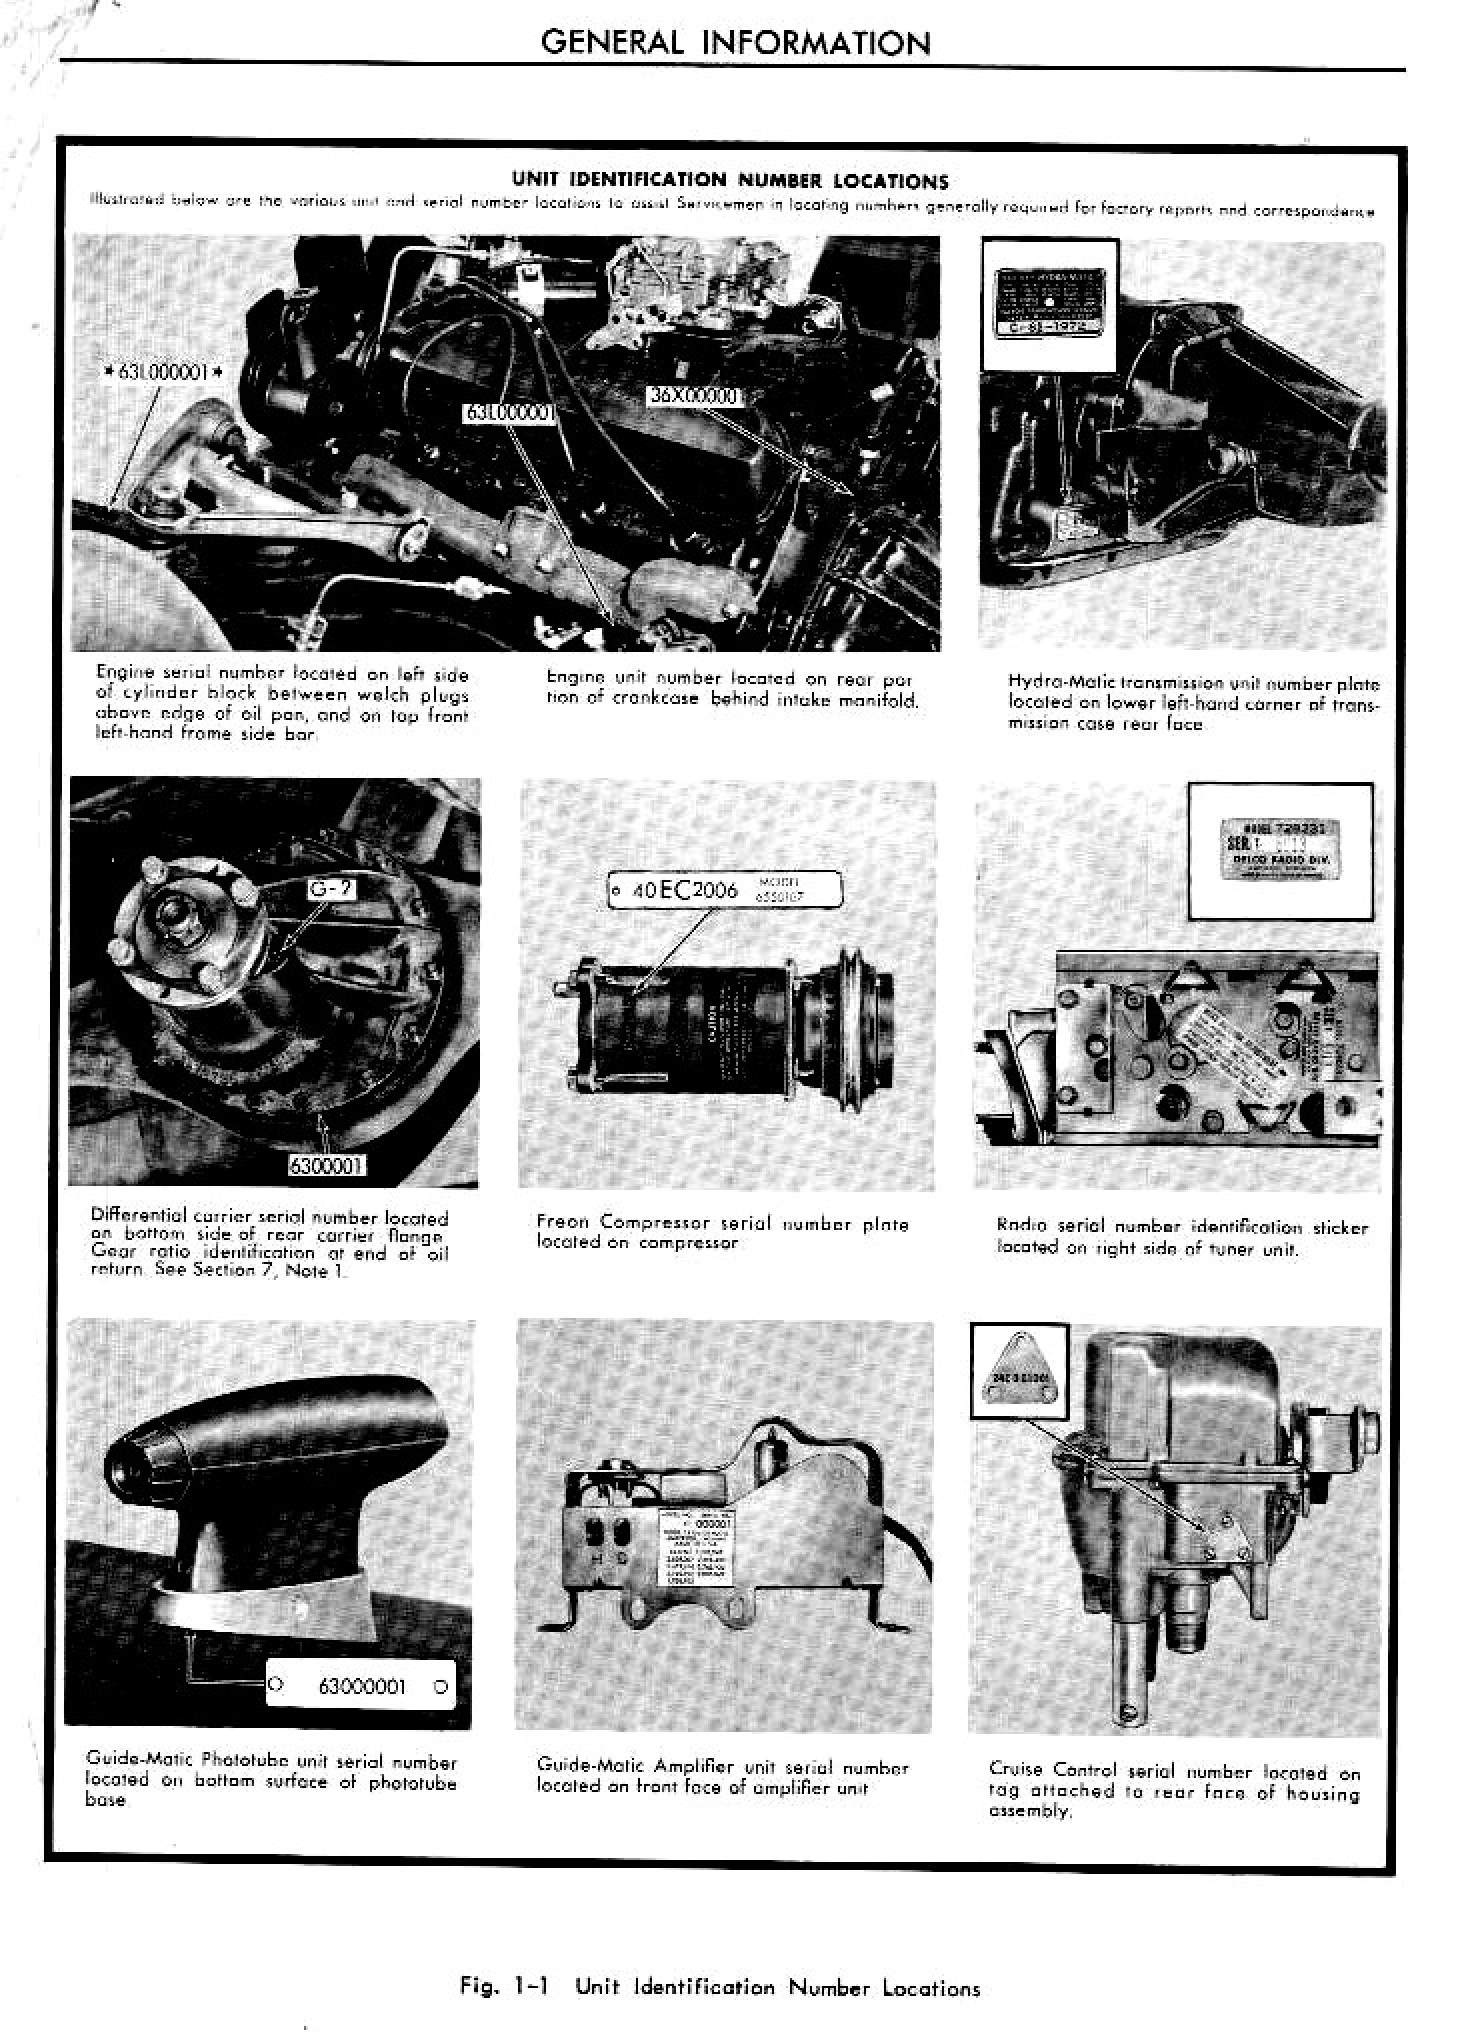 1963 cadillac coupe deville service shop manual pdf free download